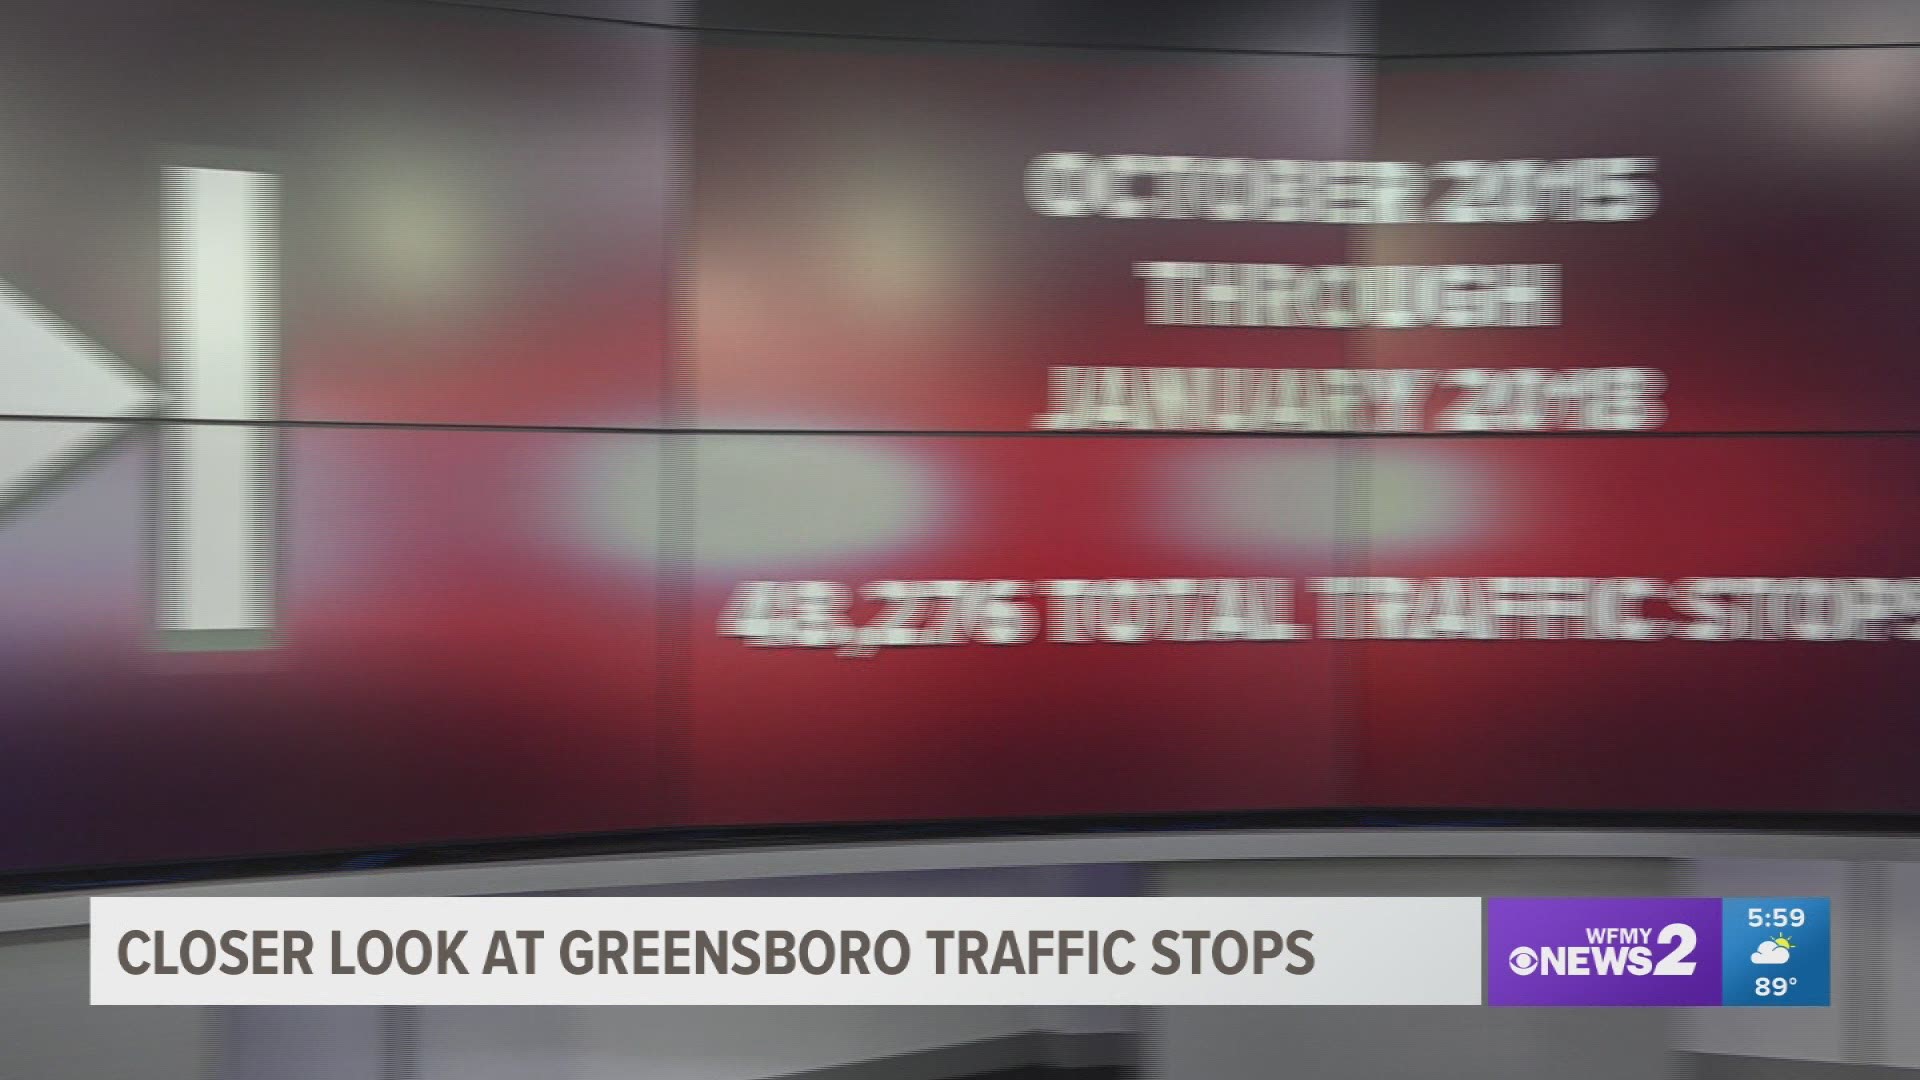 A Closer Look At Greensboro Traffic Stops